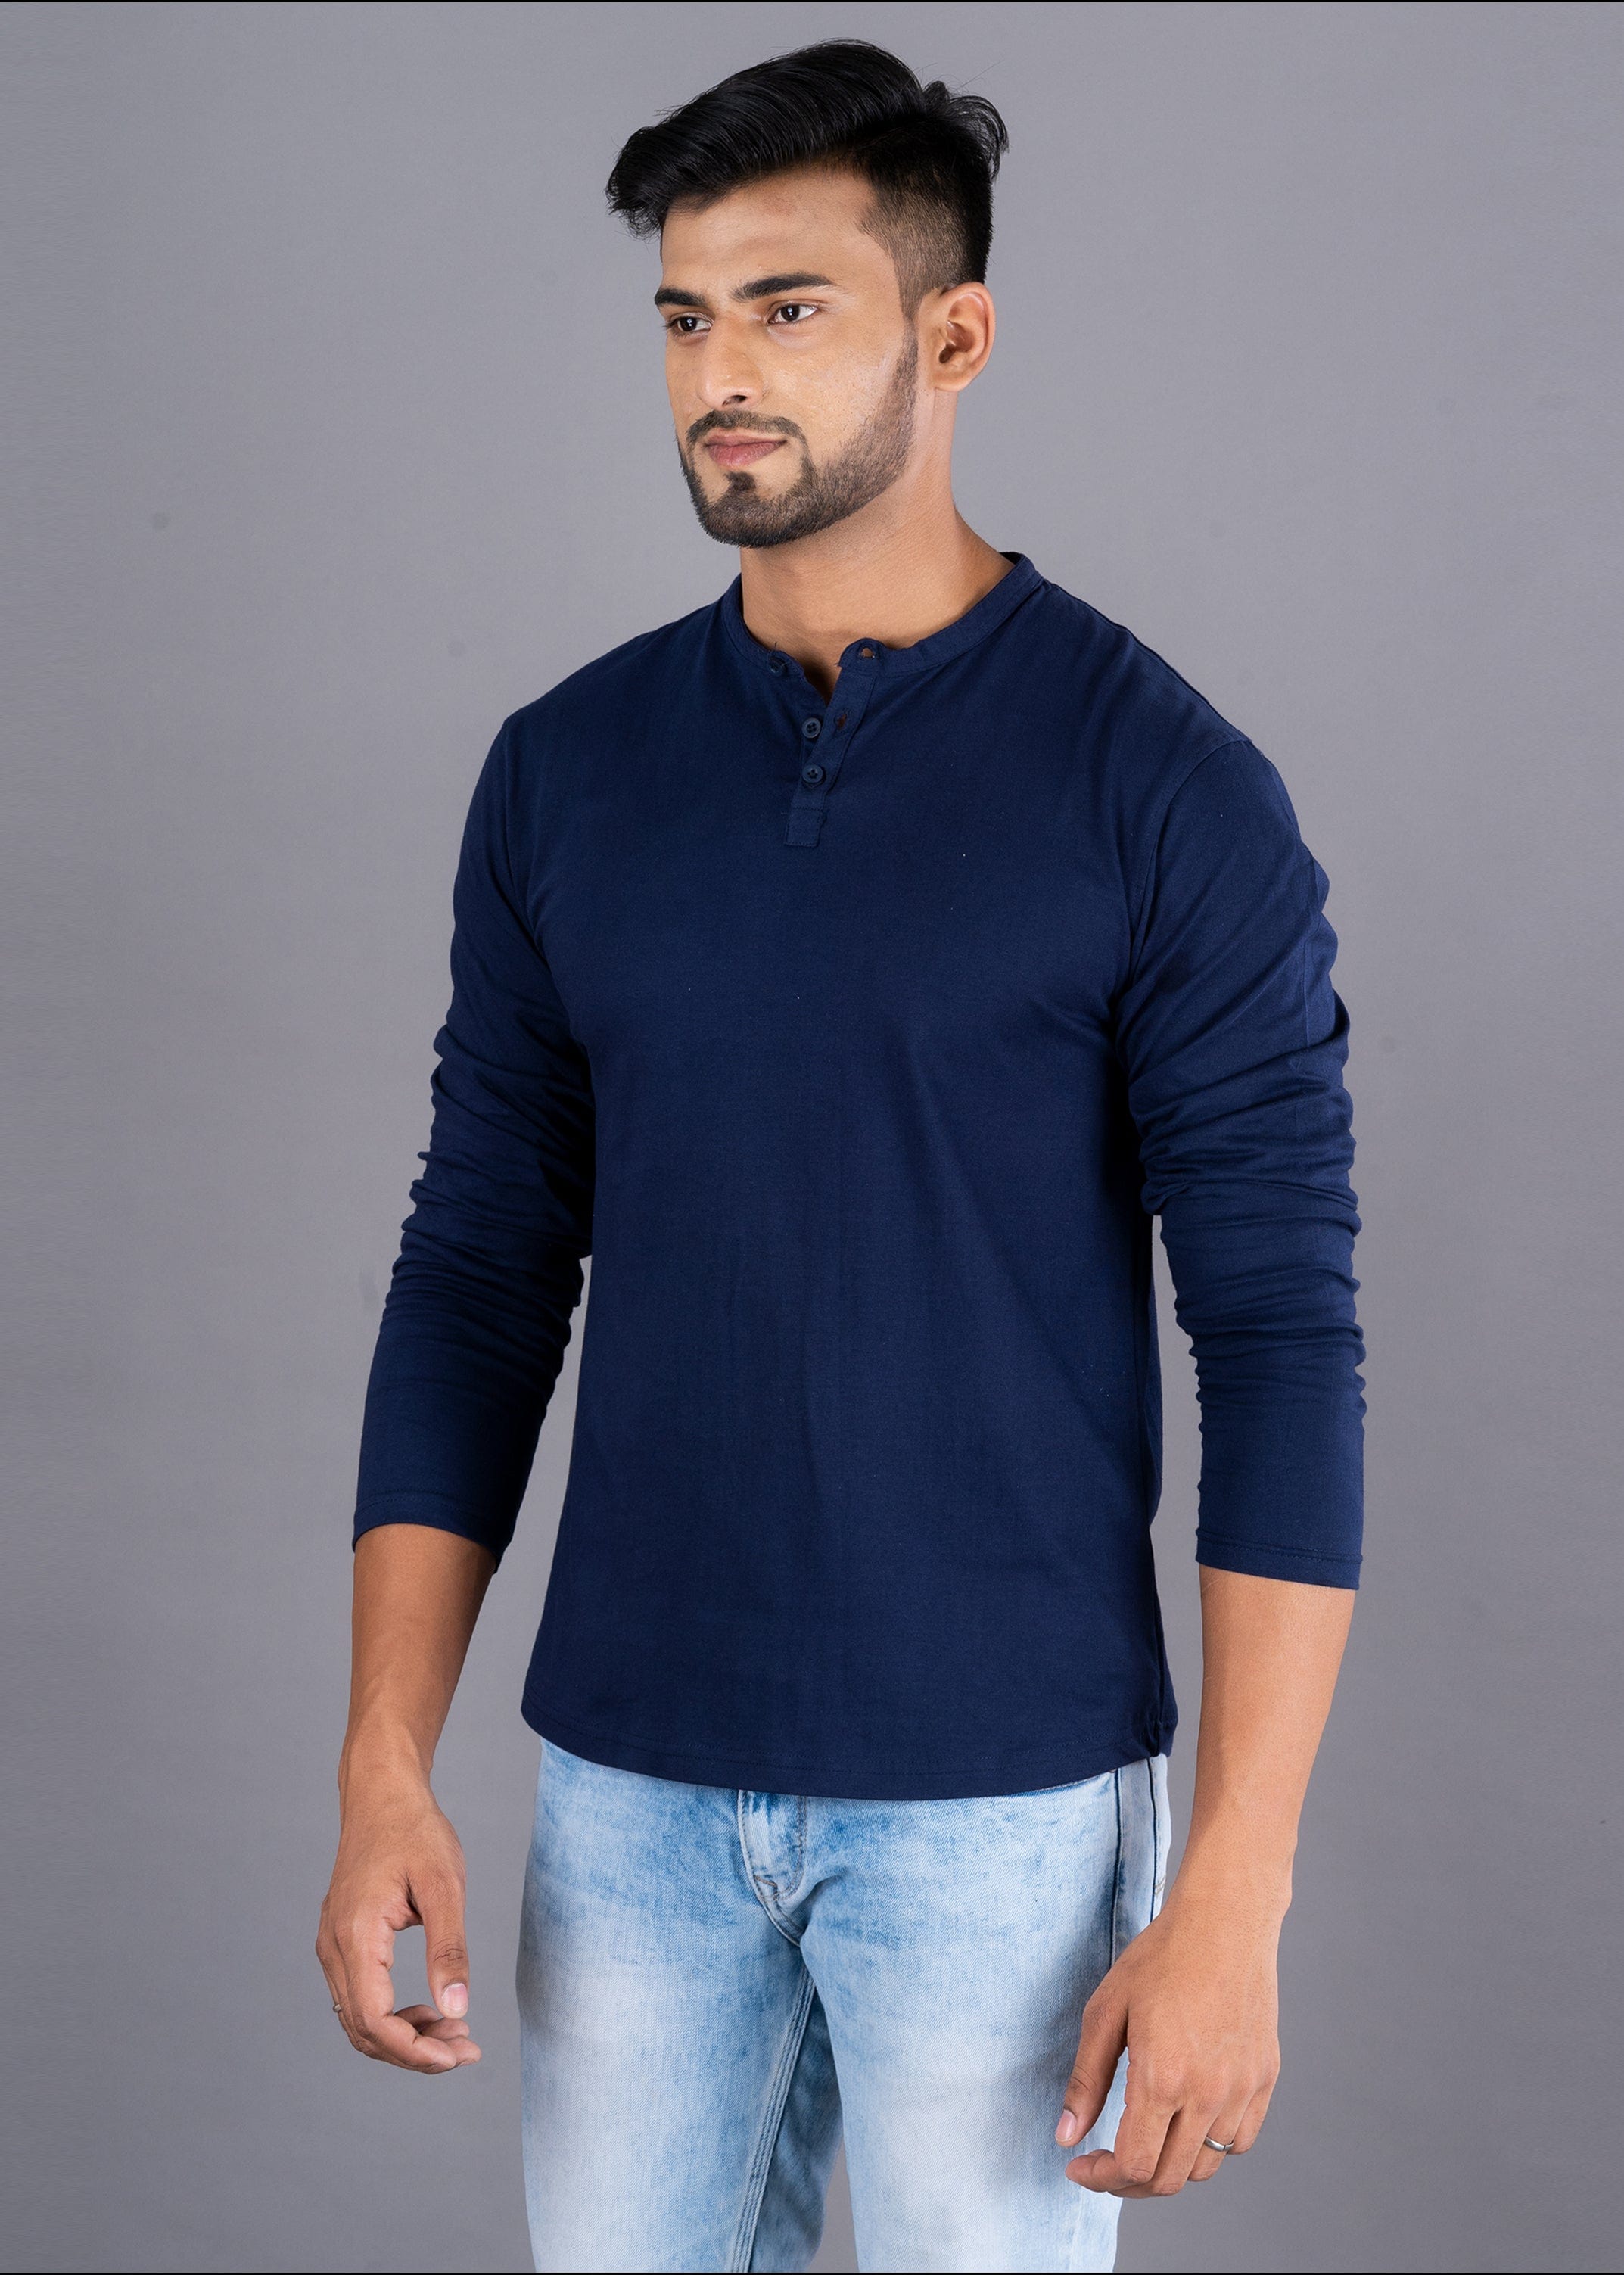 Solid Full Sleeve Premium Cotton Henley T-shirt For Men - Navy Blue